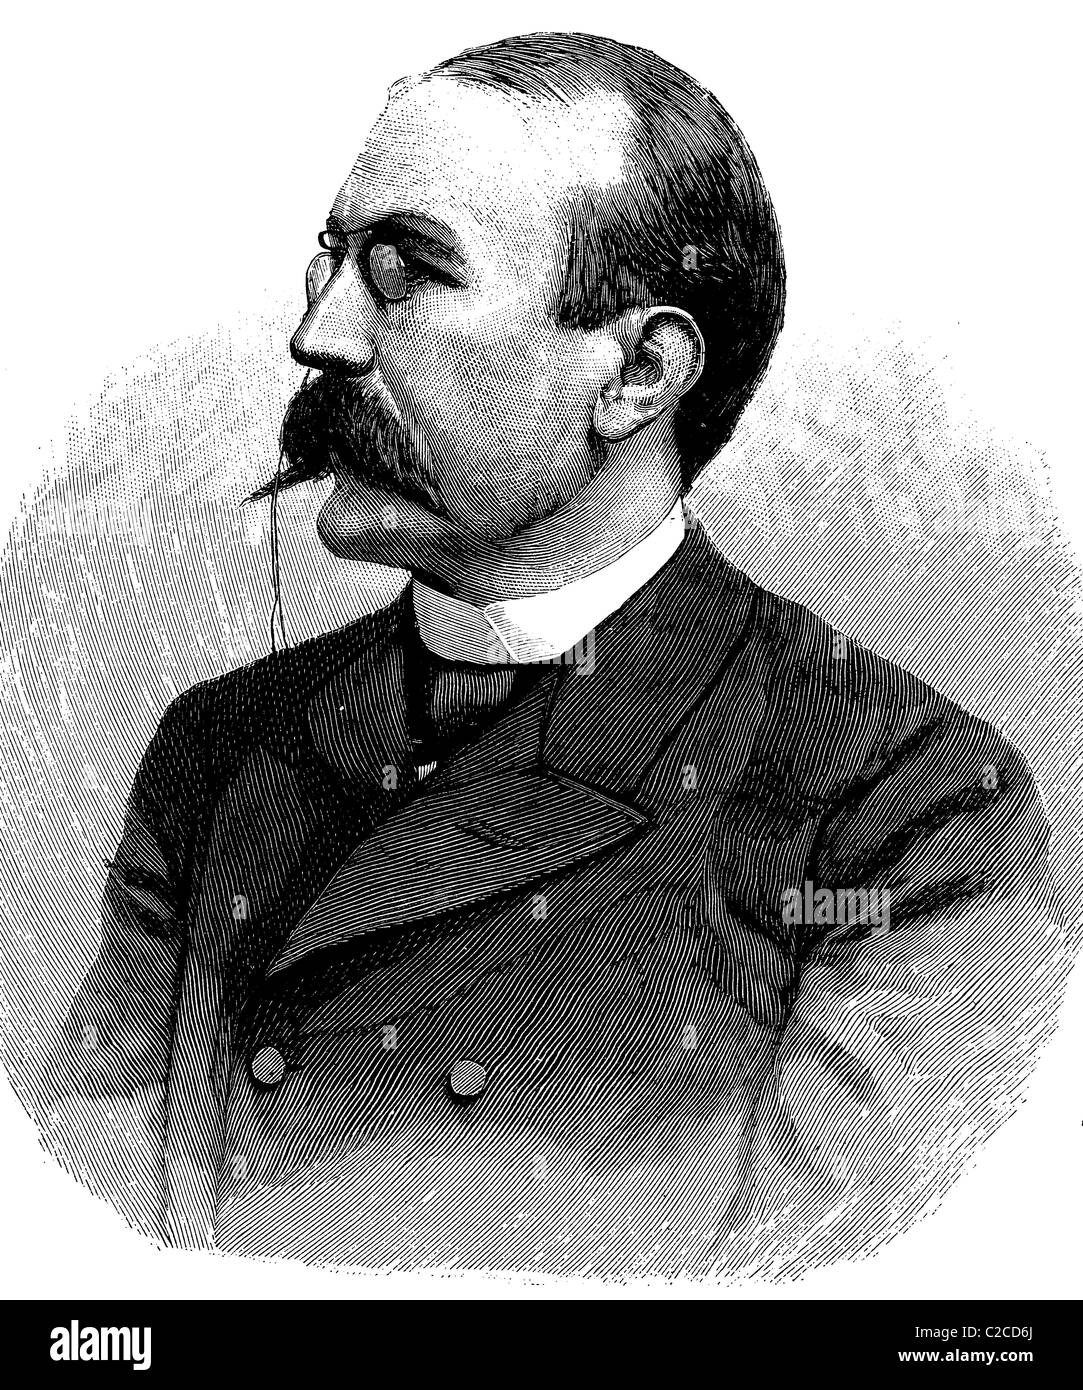 Privy Councillor Adolf Wermuth, 1855 - 1927, politician, Reich Commissioner for the World Exhibition in Chicago in 1893, histori Stock Photo